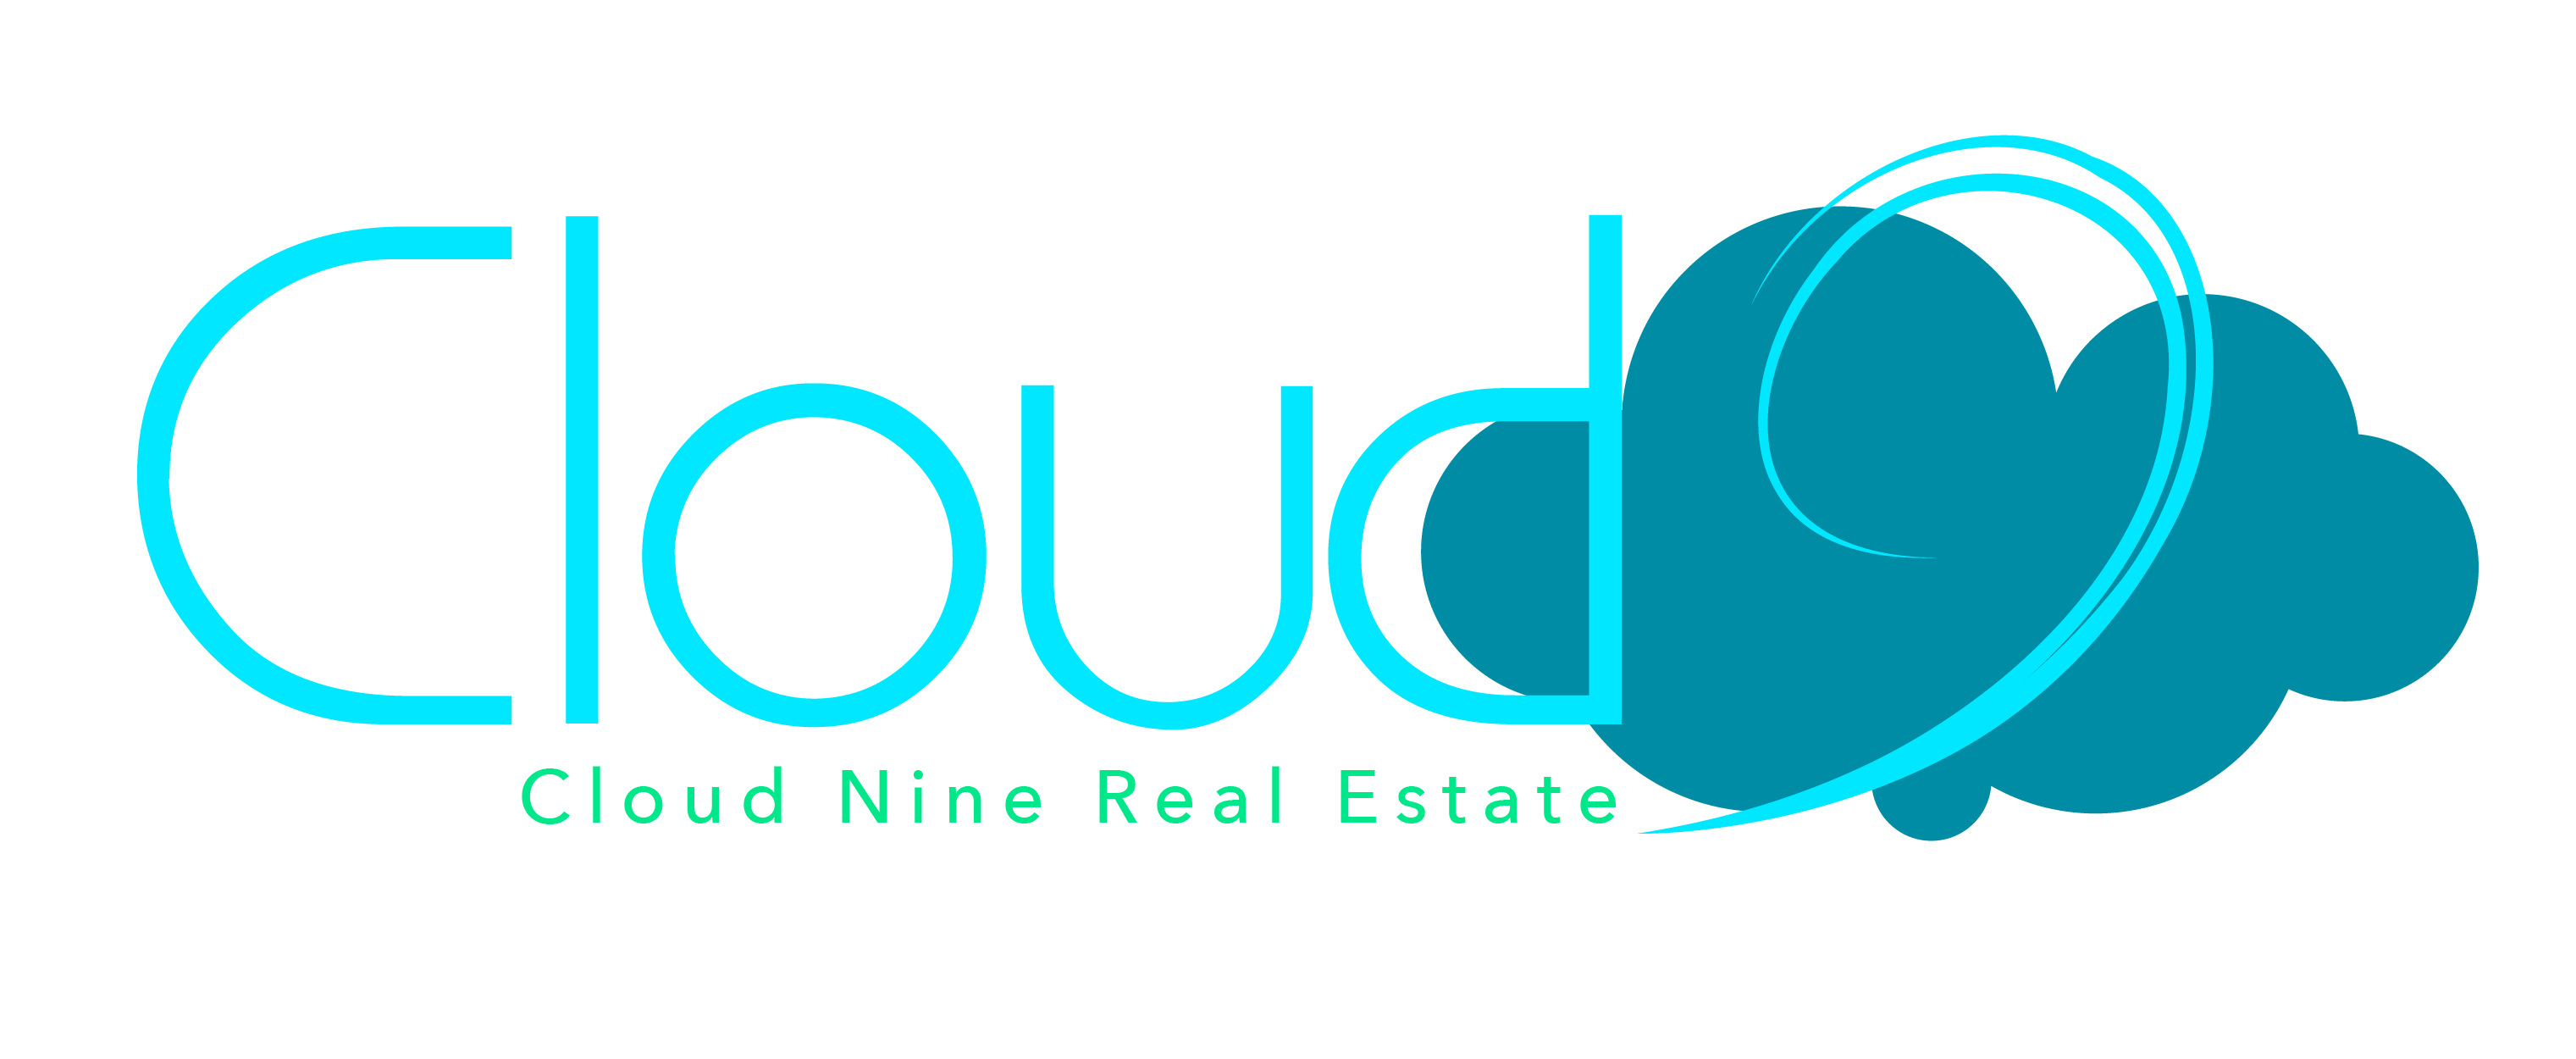 Cloud Nine Real Estate Logo